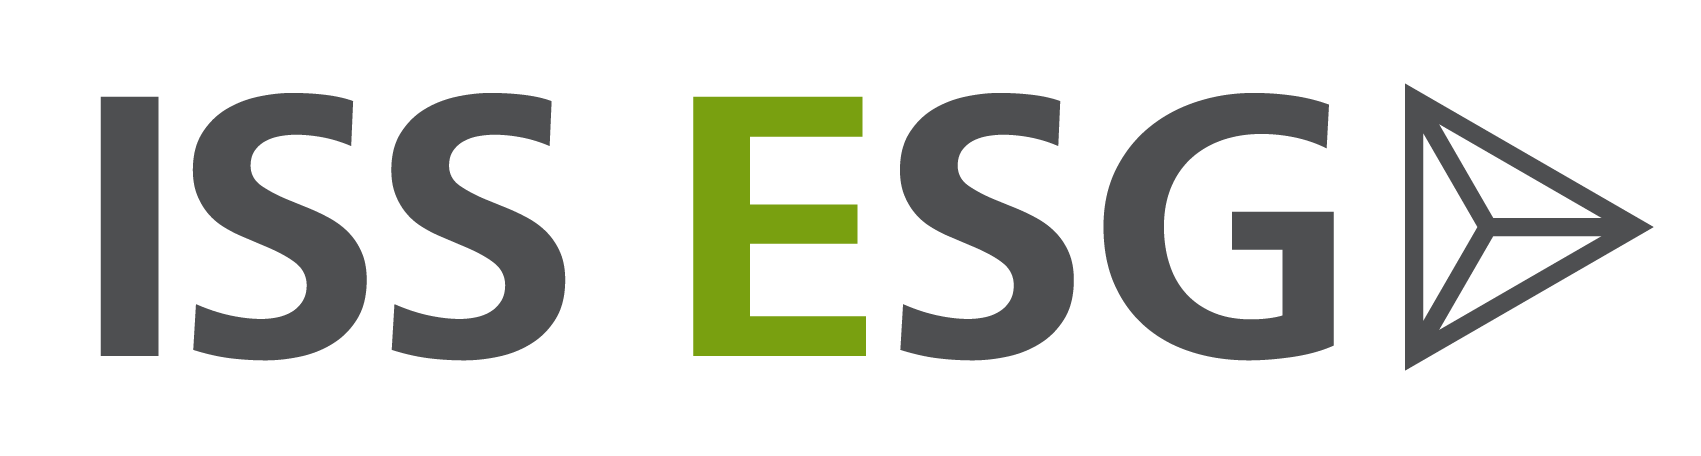 Esg агентства. ESG. ESG лого. ESG проекты. ISS ESG rating.